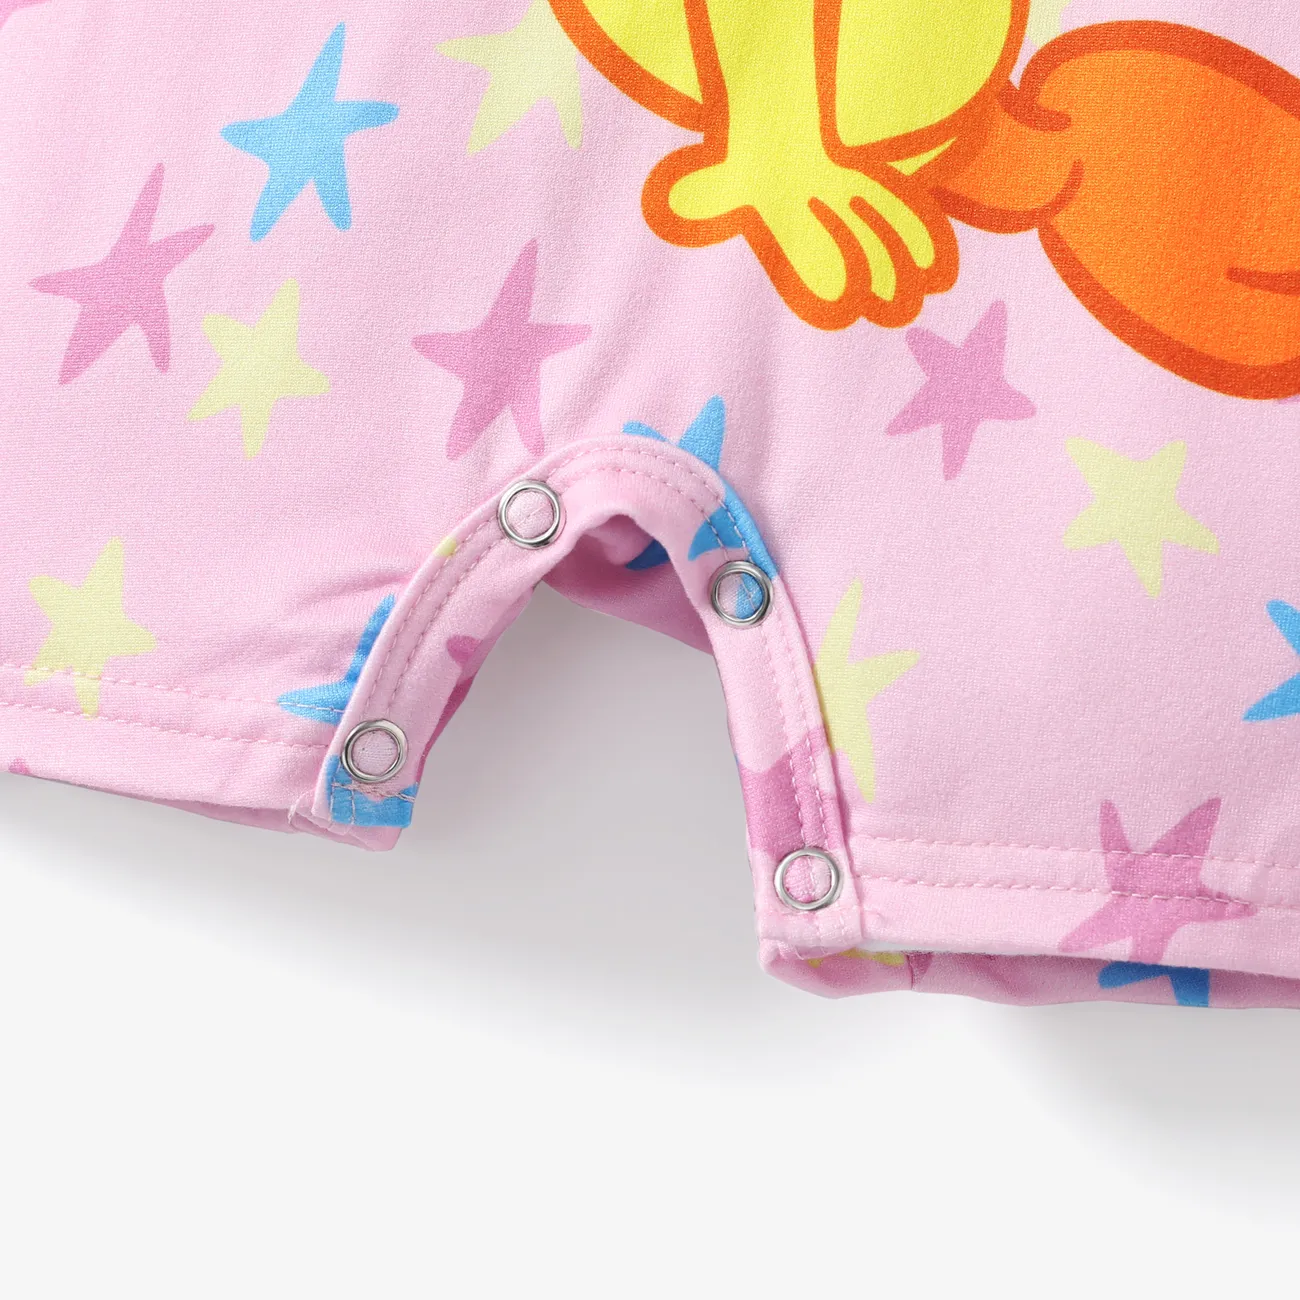 Looney Tunes Baby Boys/Girls Cartoon Animal Print Short-sleeve Romper Pink big image 1